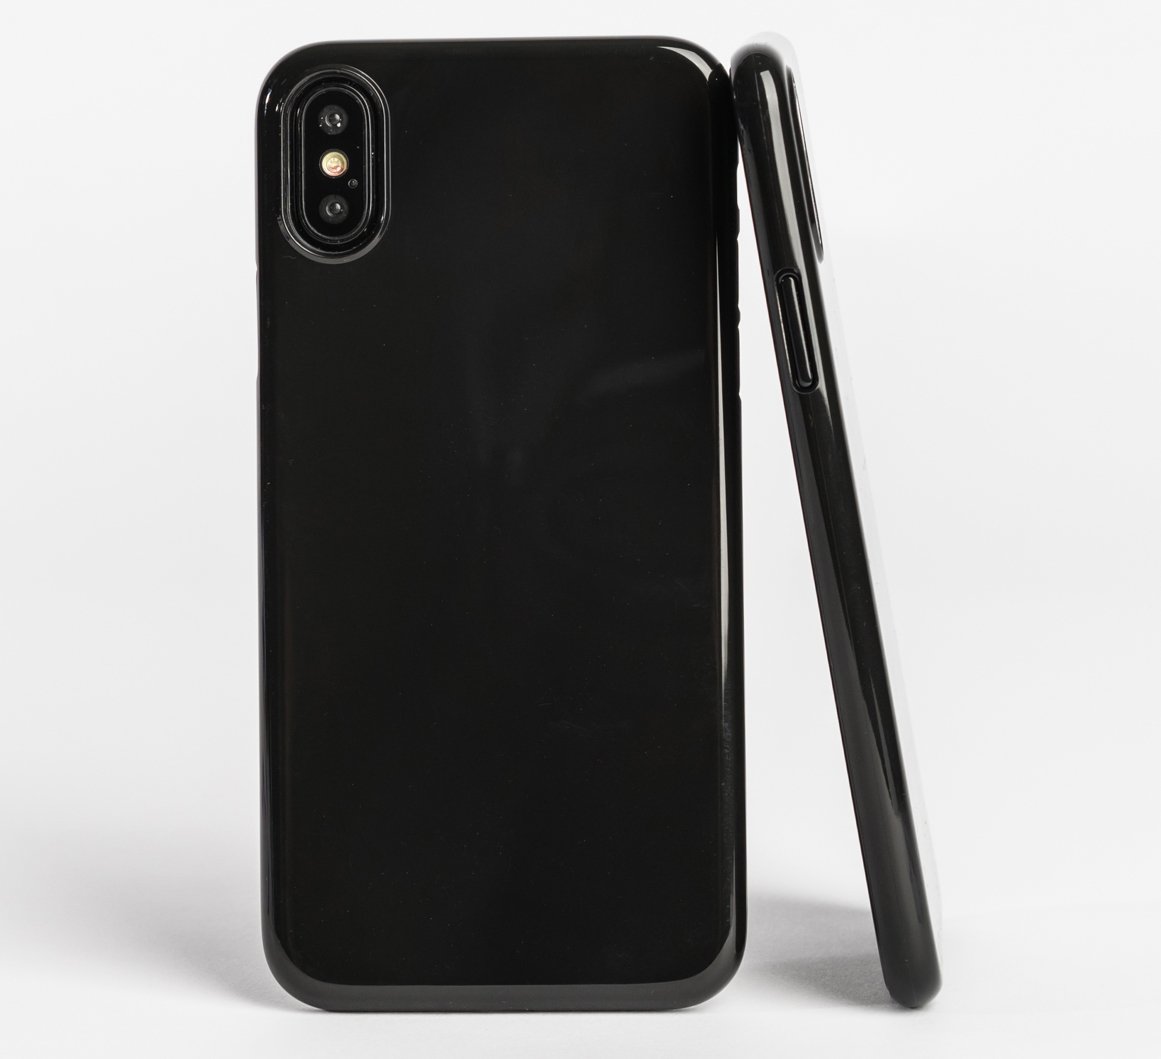 Peel's Super Thin iPhone X case in black